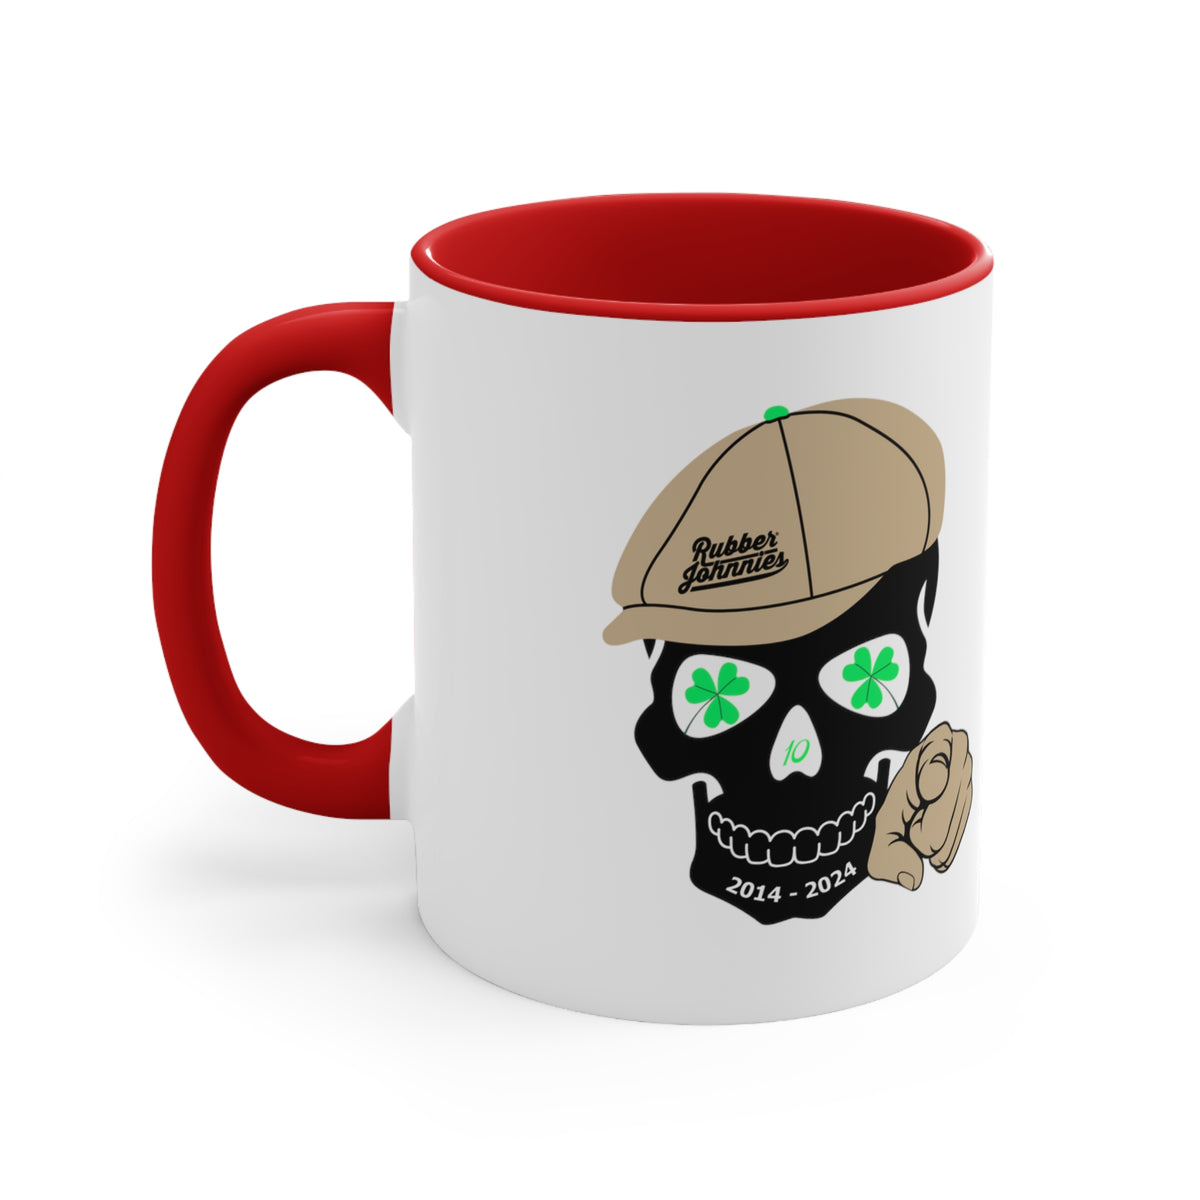 We Want You Coffee Mug, 11oz